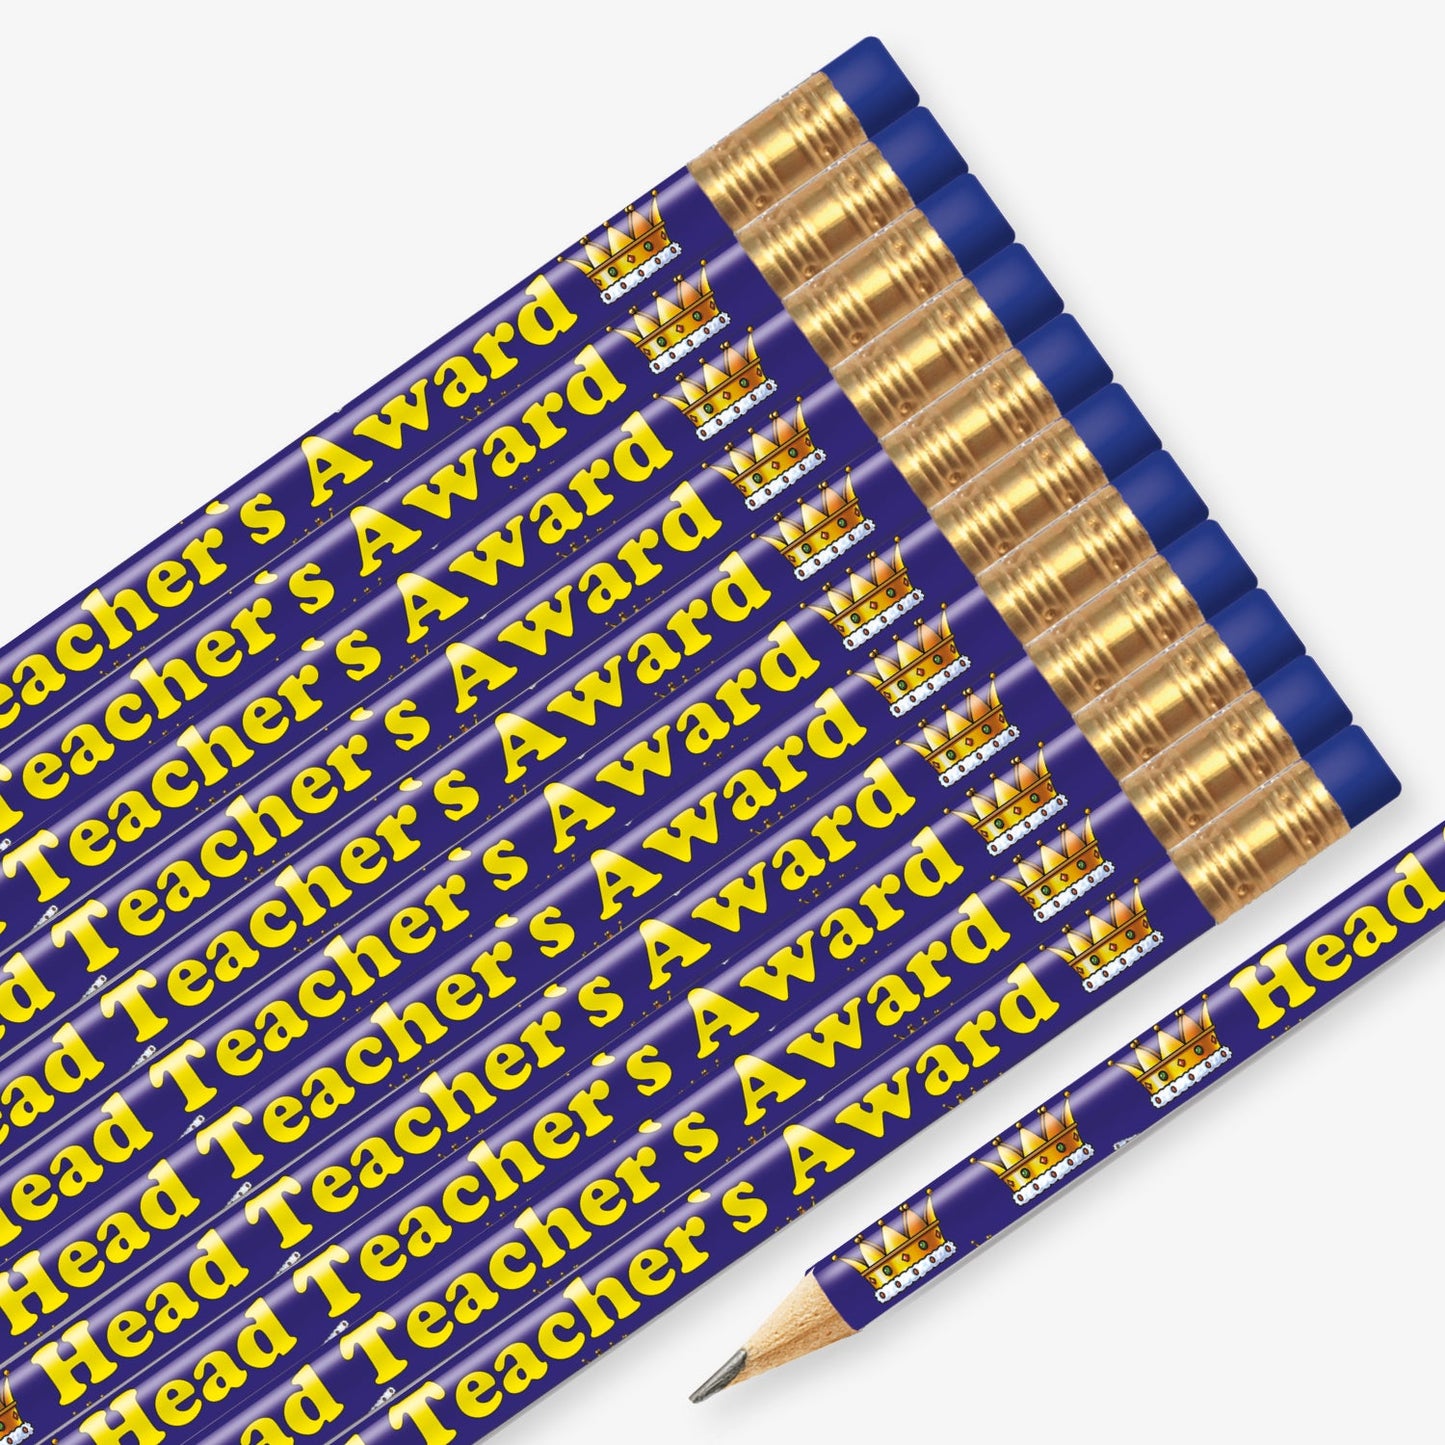 12 Head Teacher's Award Crown Pencils